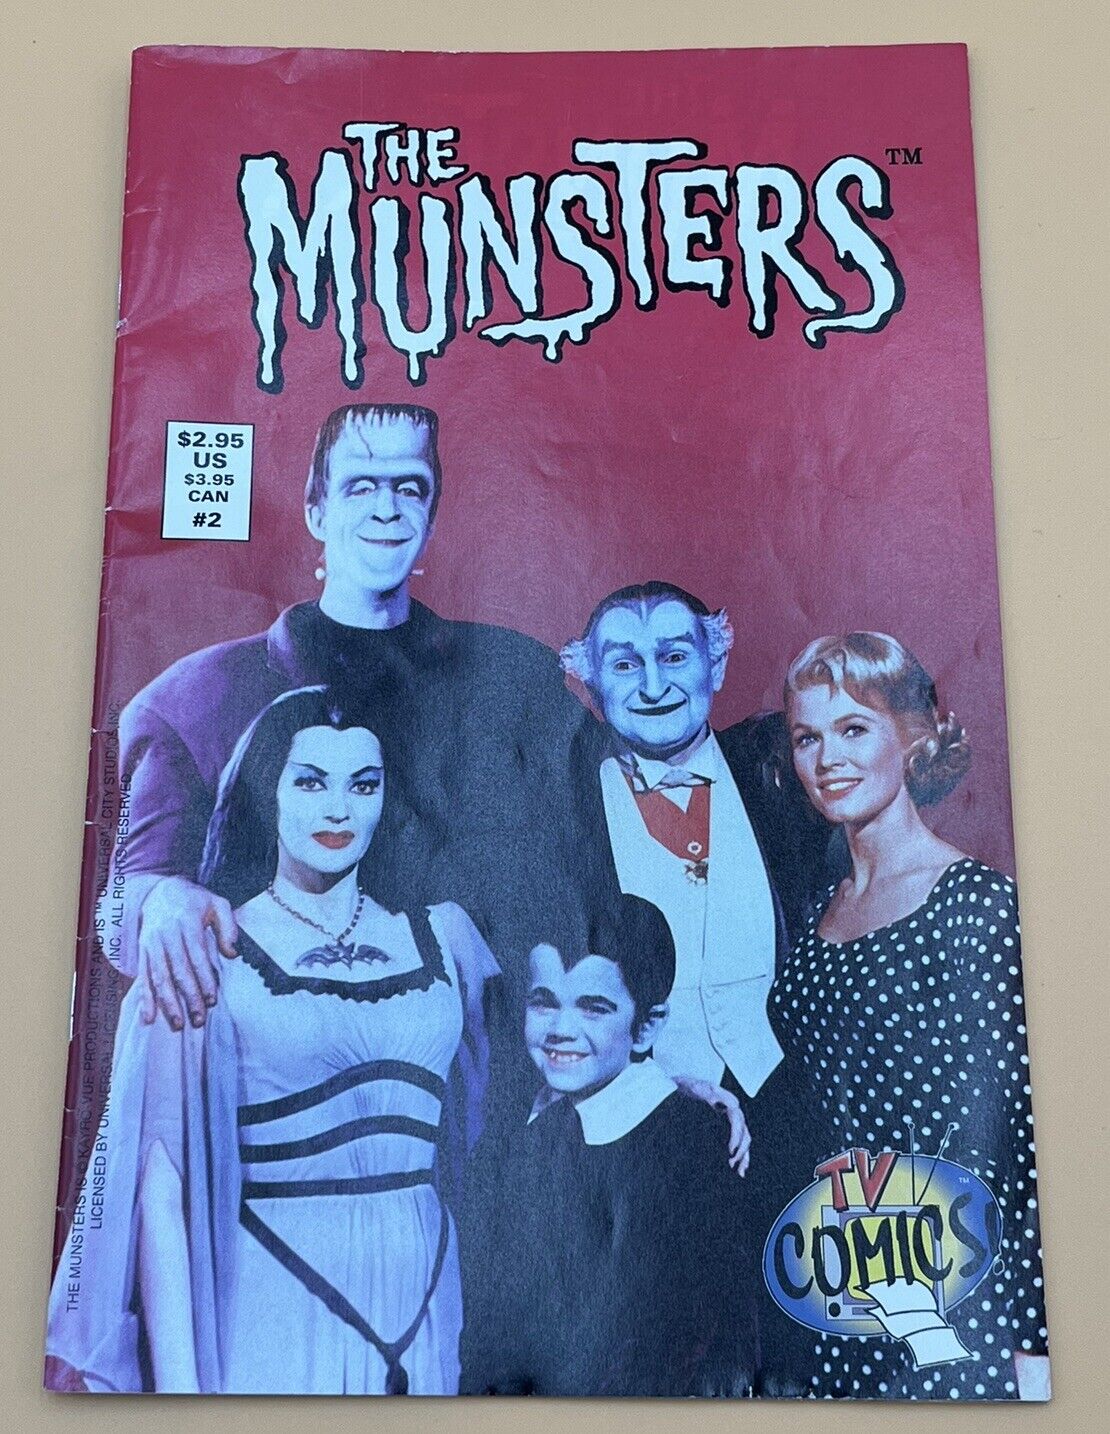 The Munsters #2 (1997) TV Comics, Photo Cover -  Butch Patrick - EX